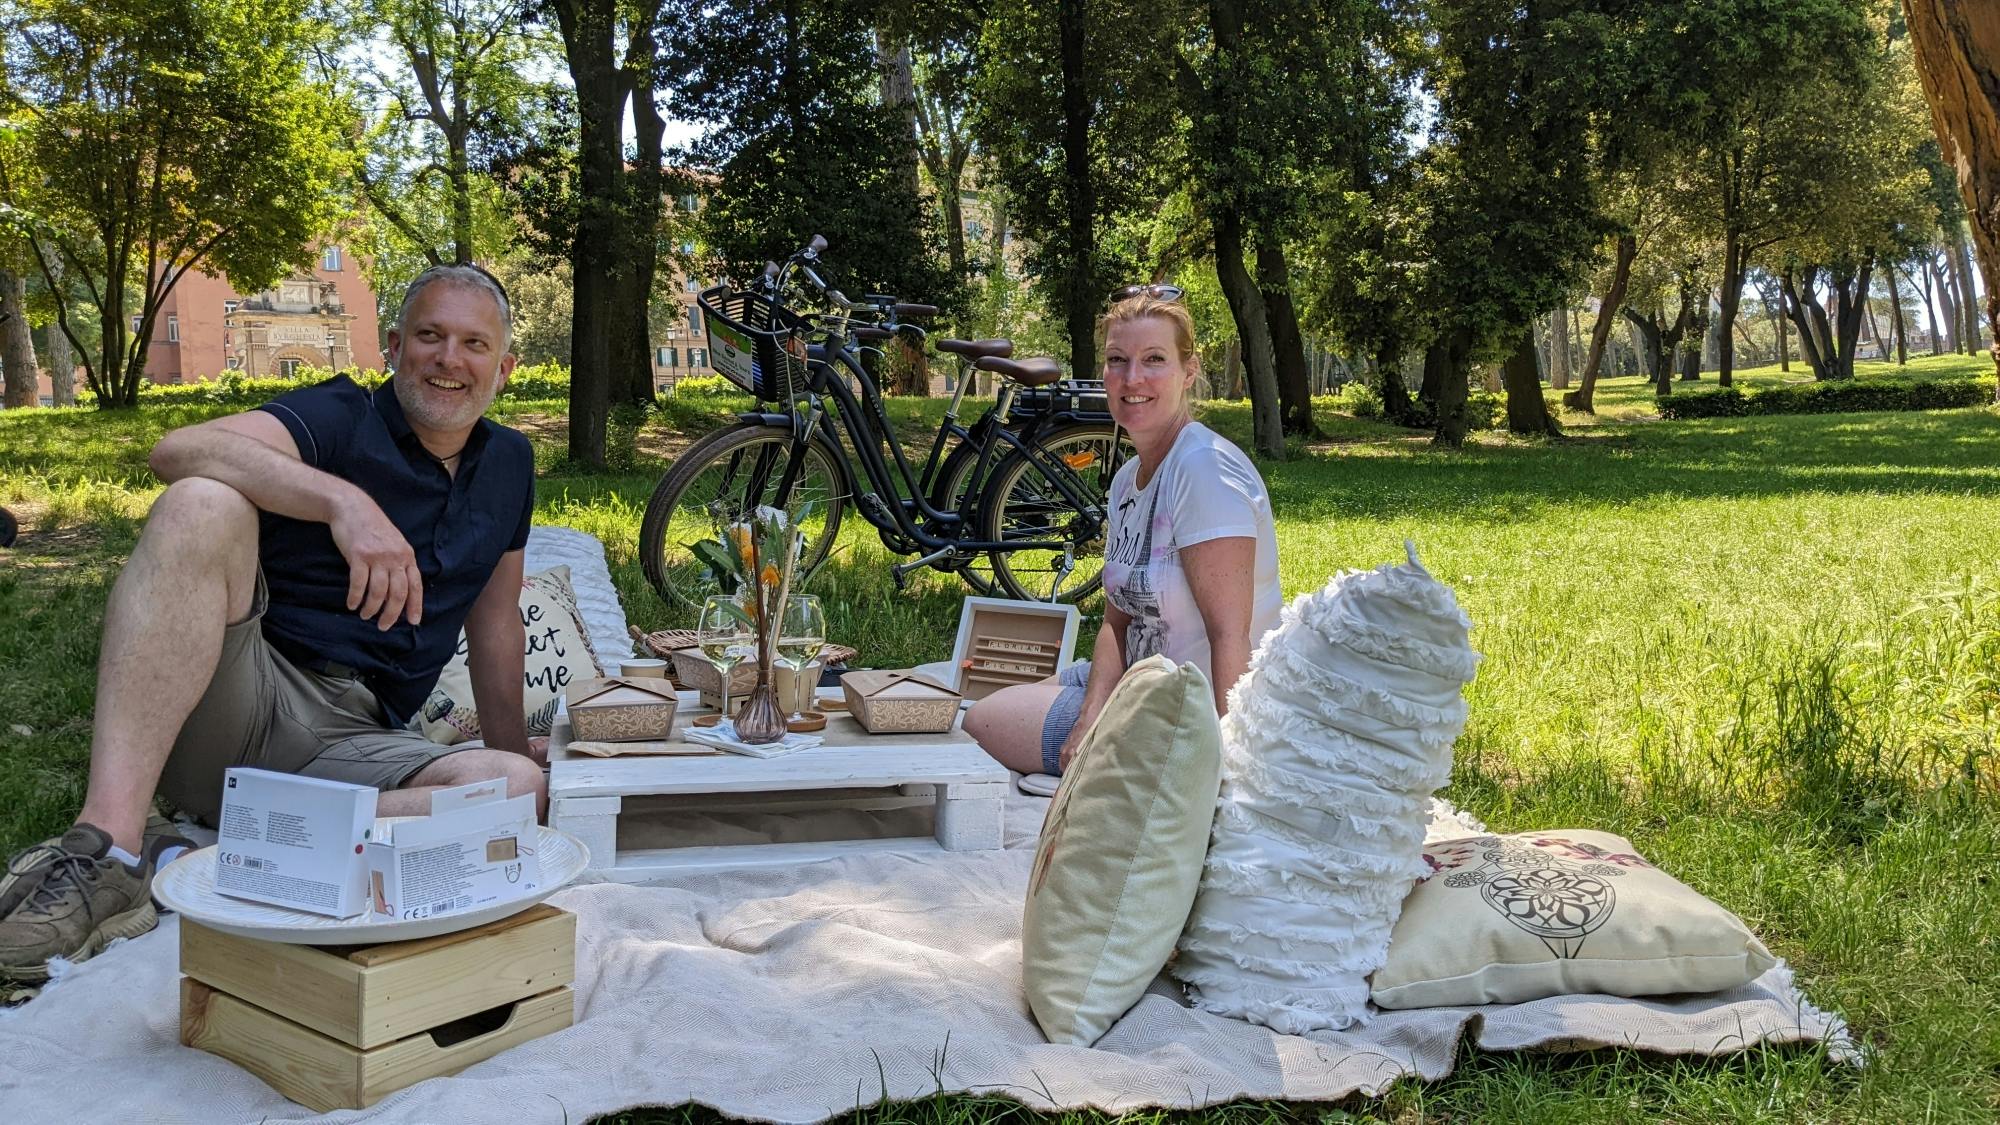 Villa Borghese e-bike tour with optional picnic